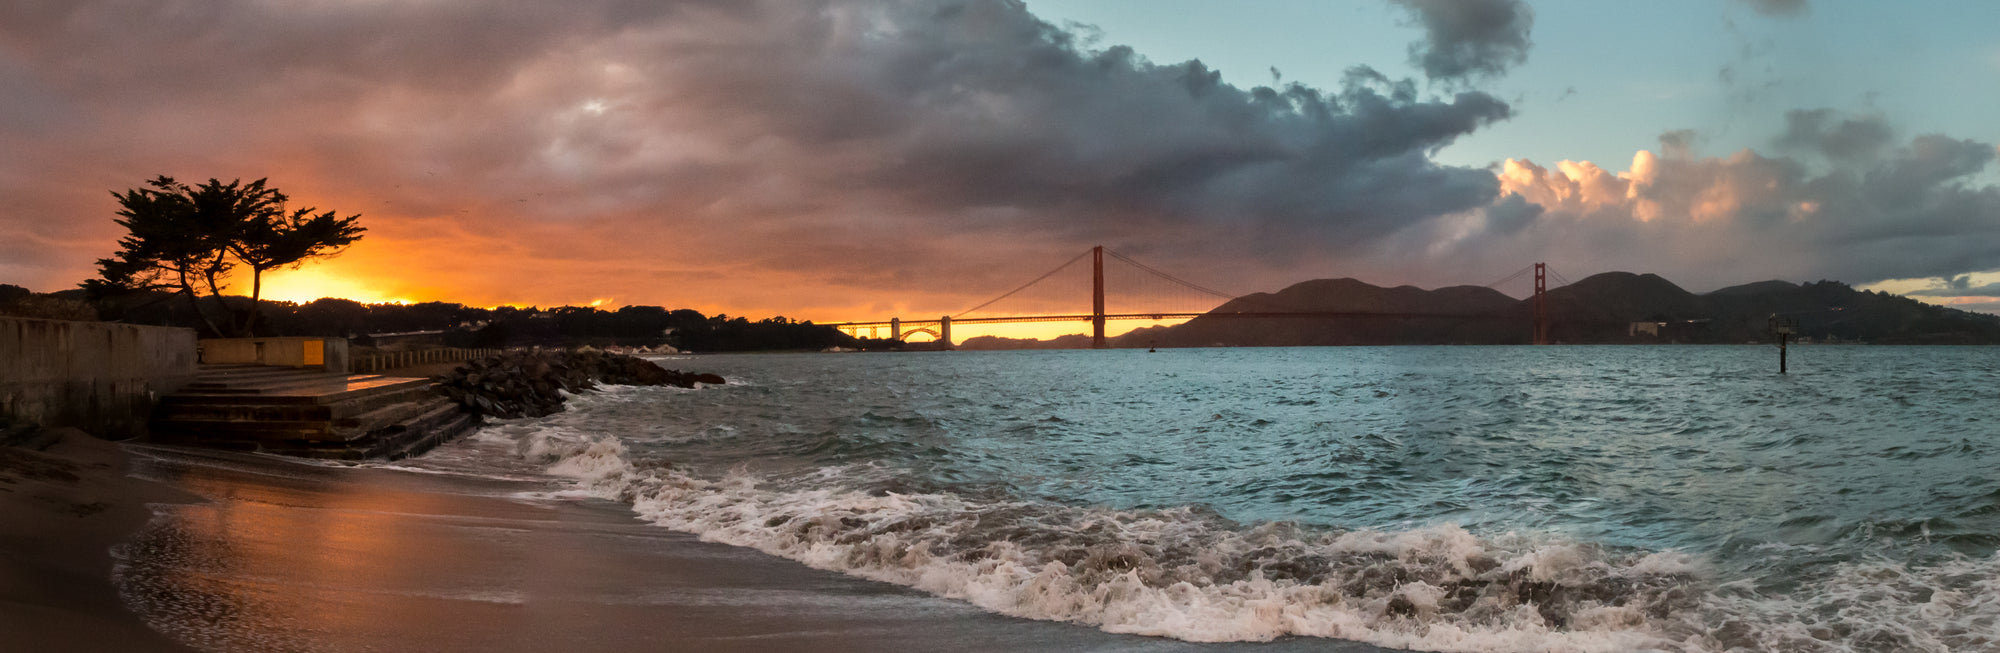 Panorama of orange and blue sunset at the Golden Gate Bridge in California